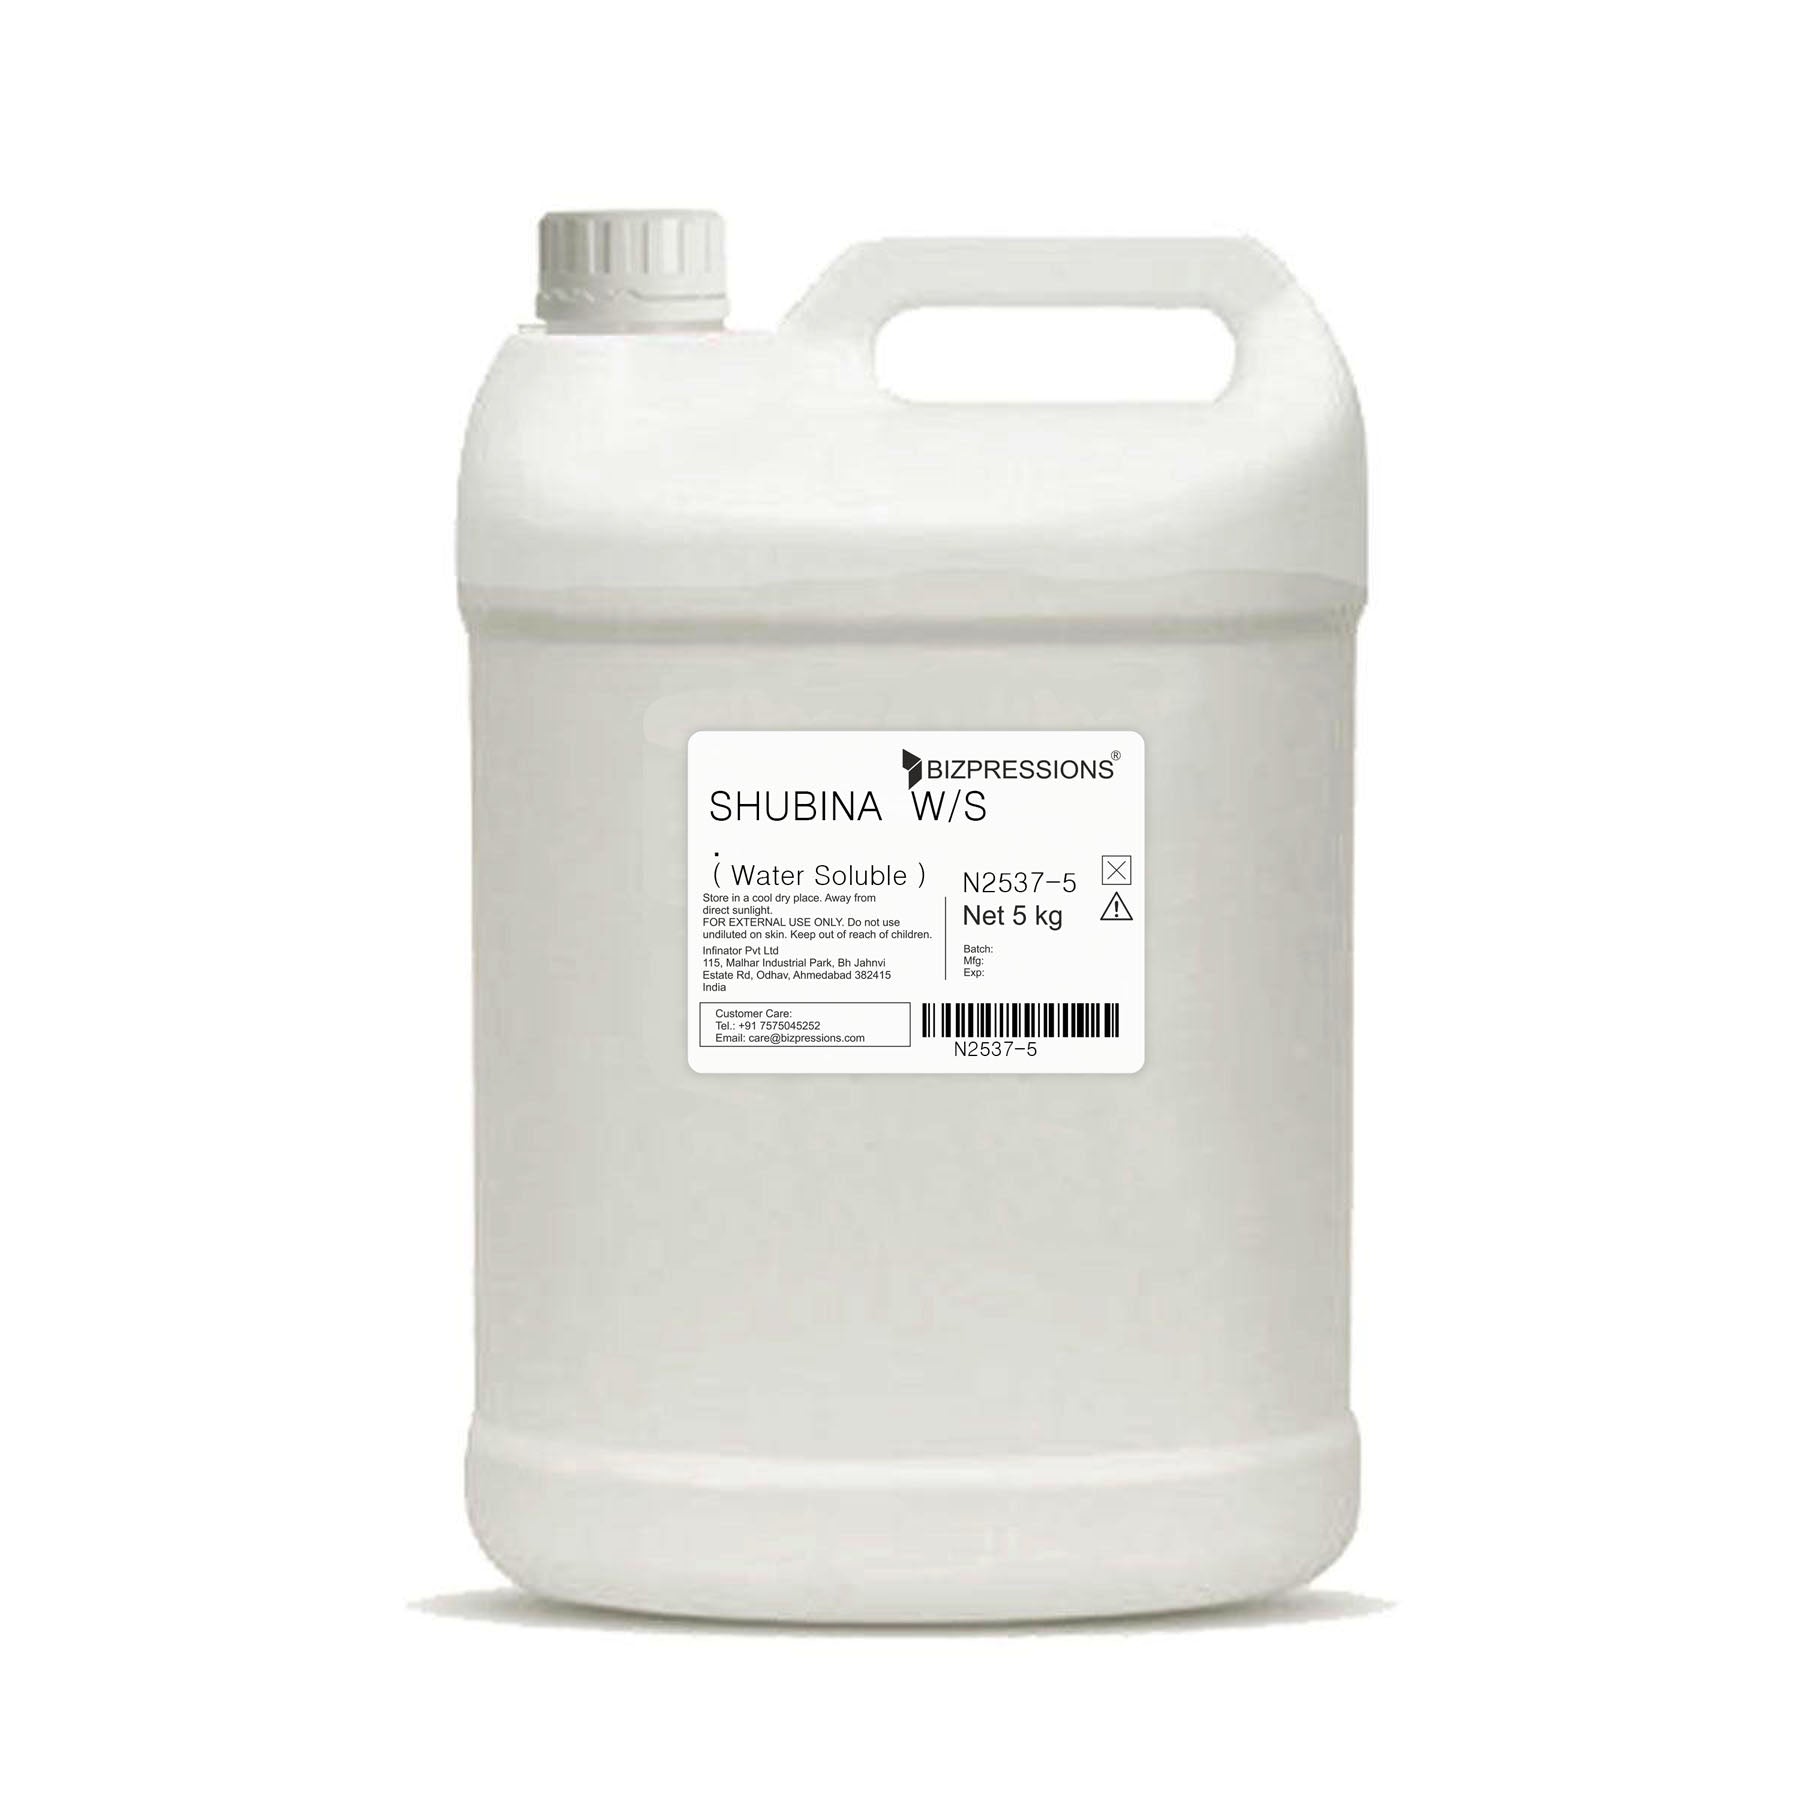 SHUBINA W/S - Fragrance ( Water Soluble ) - 5 kg